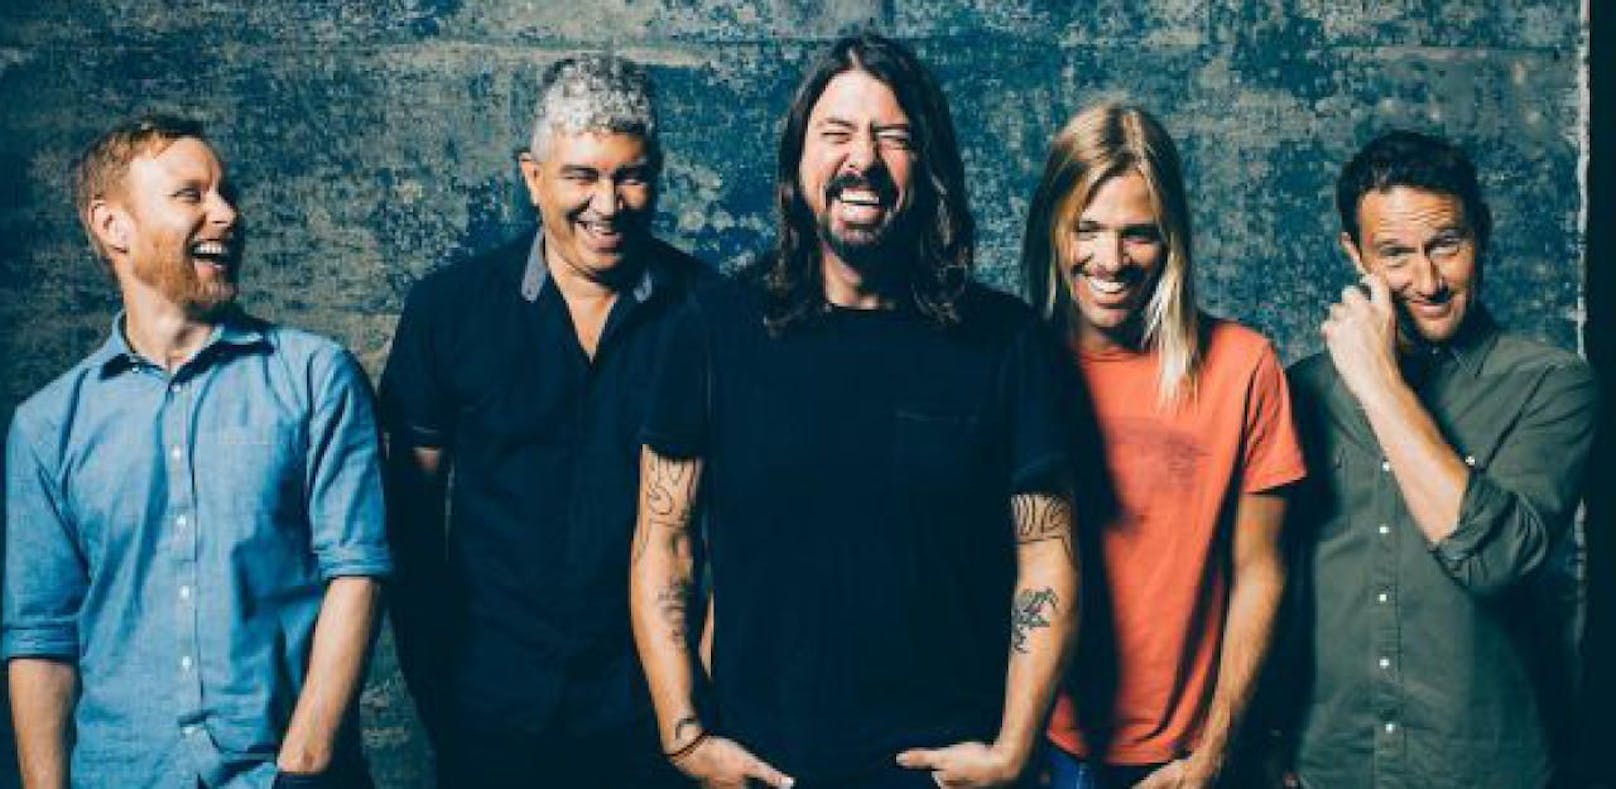 Dave Grohl kündigt neues Album der Foo Fighters an